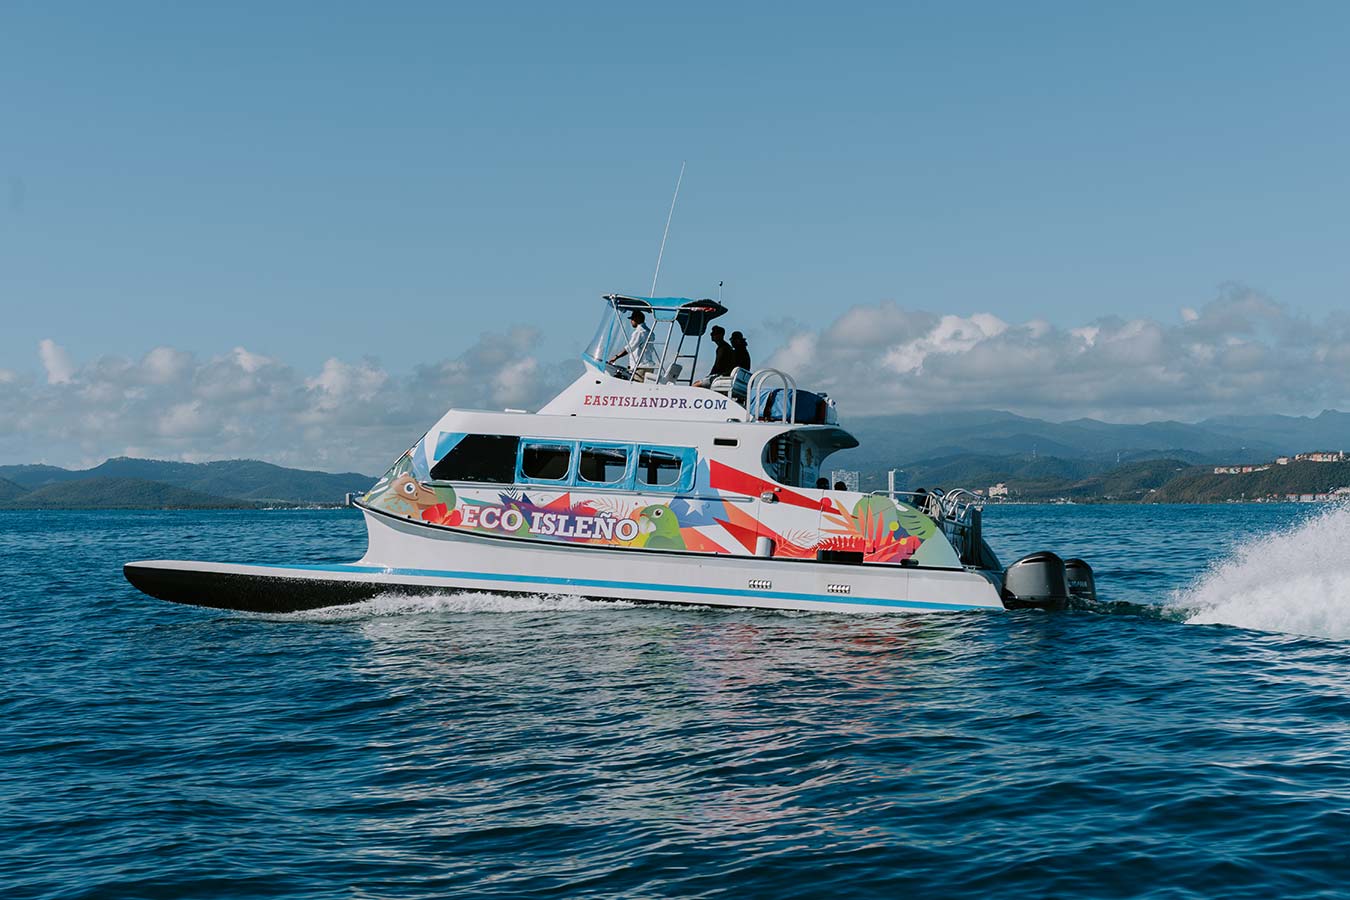 Eco Isleño Power Catamaran